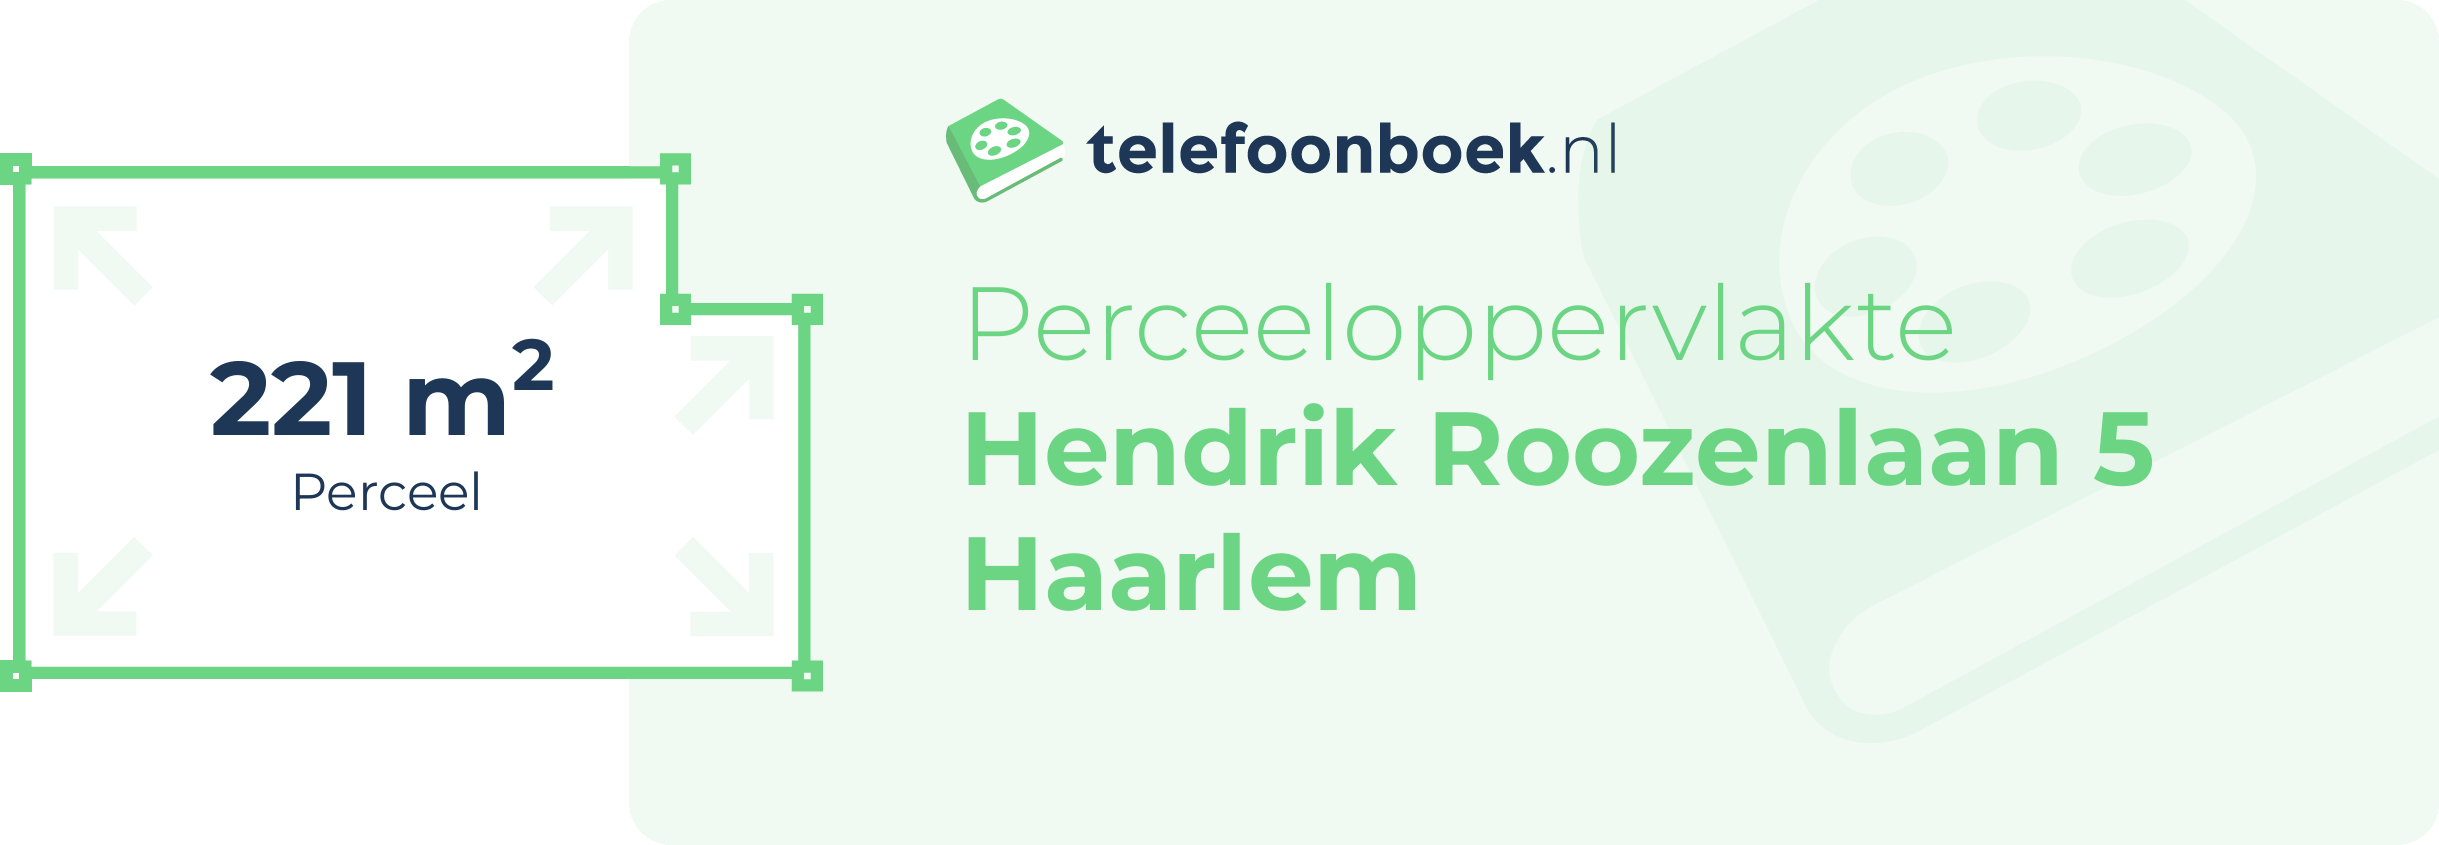 Perceeloppervlakte Hendrik Roozenlaan 5 Haarlem